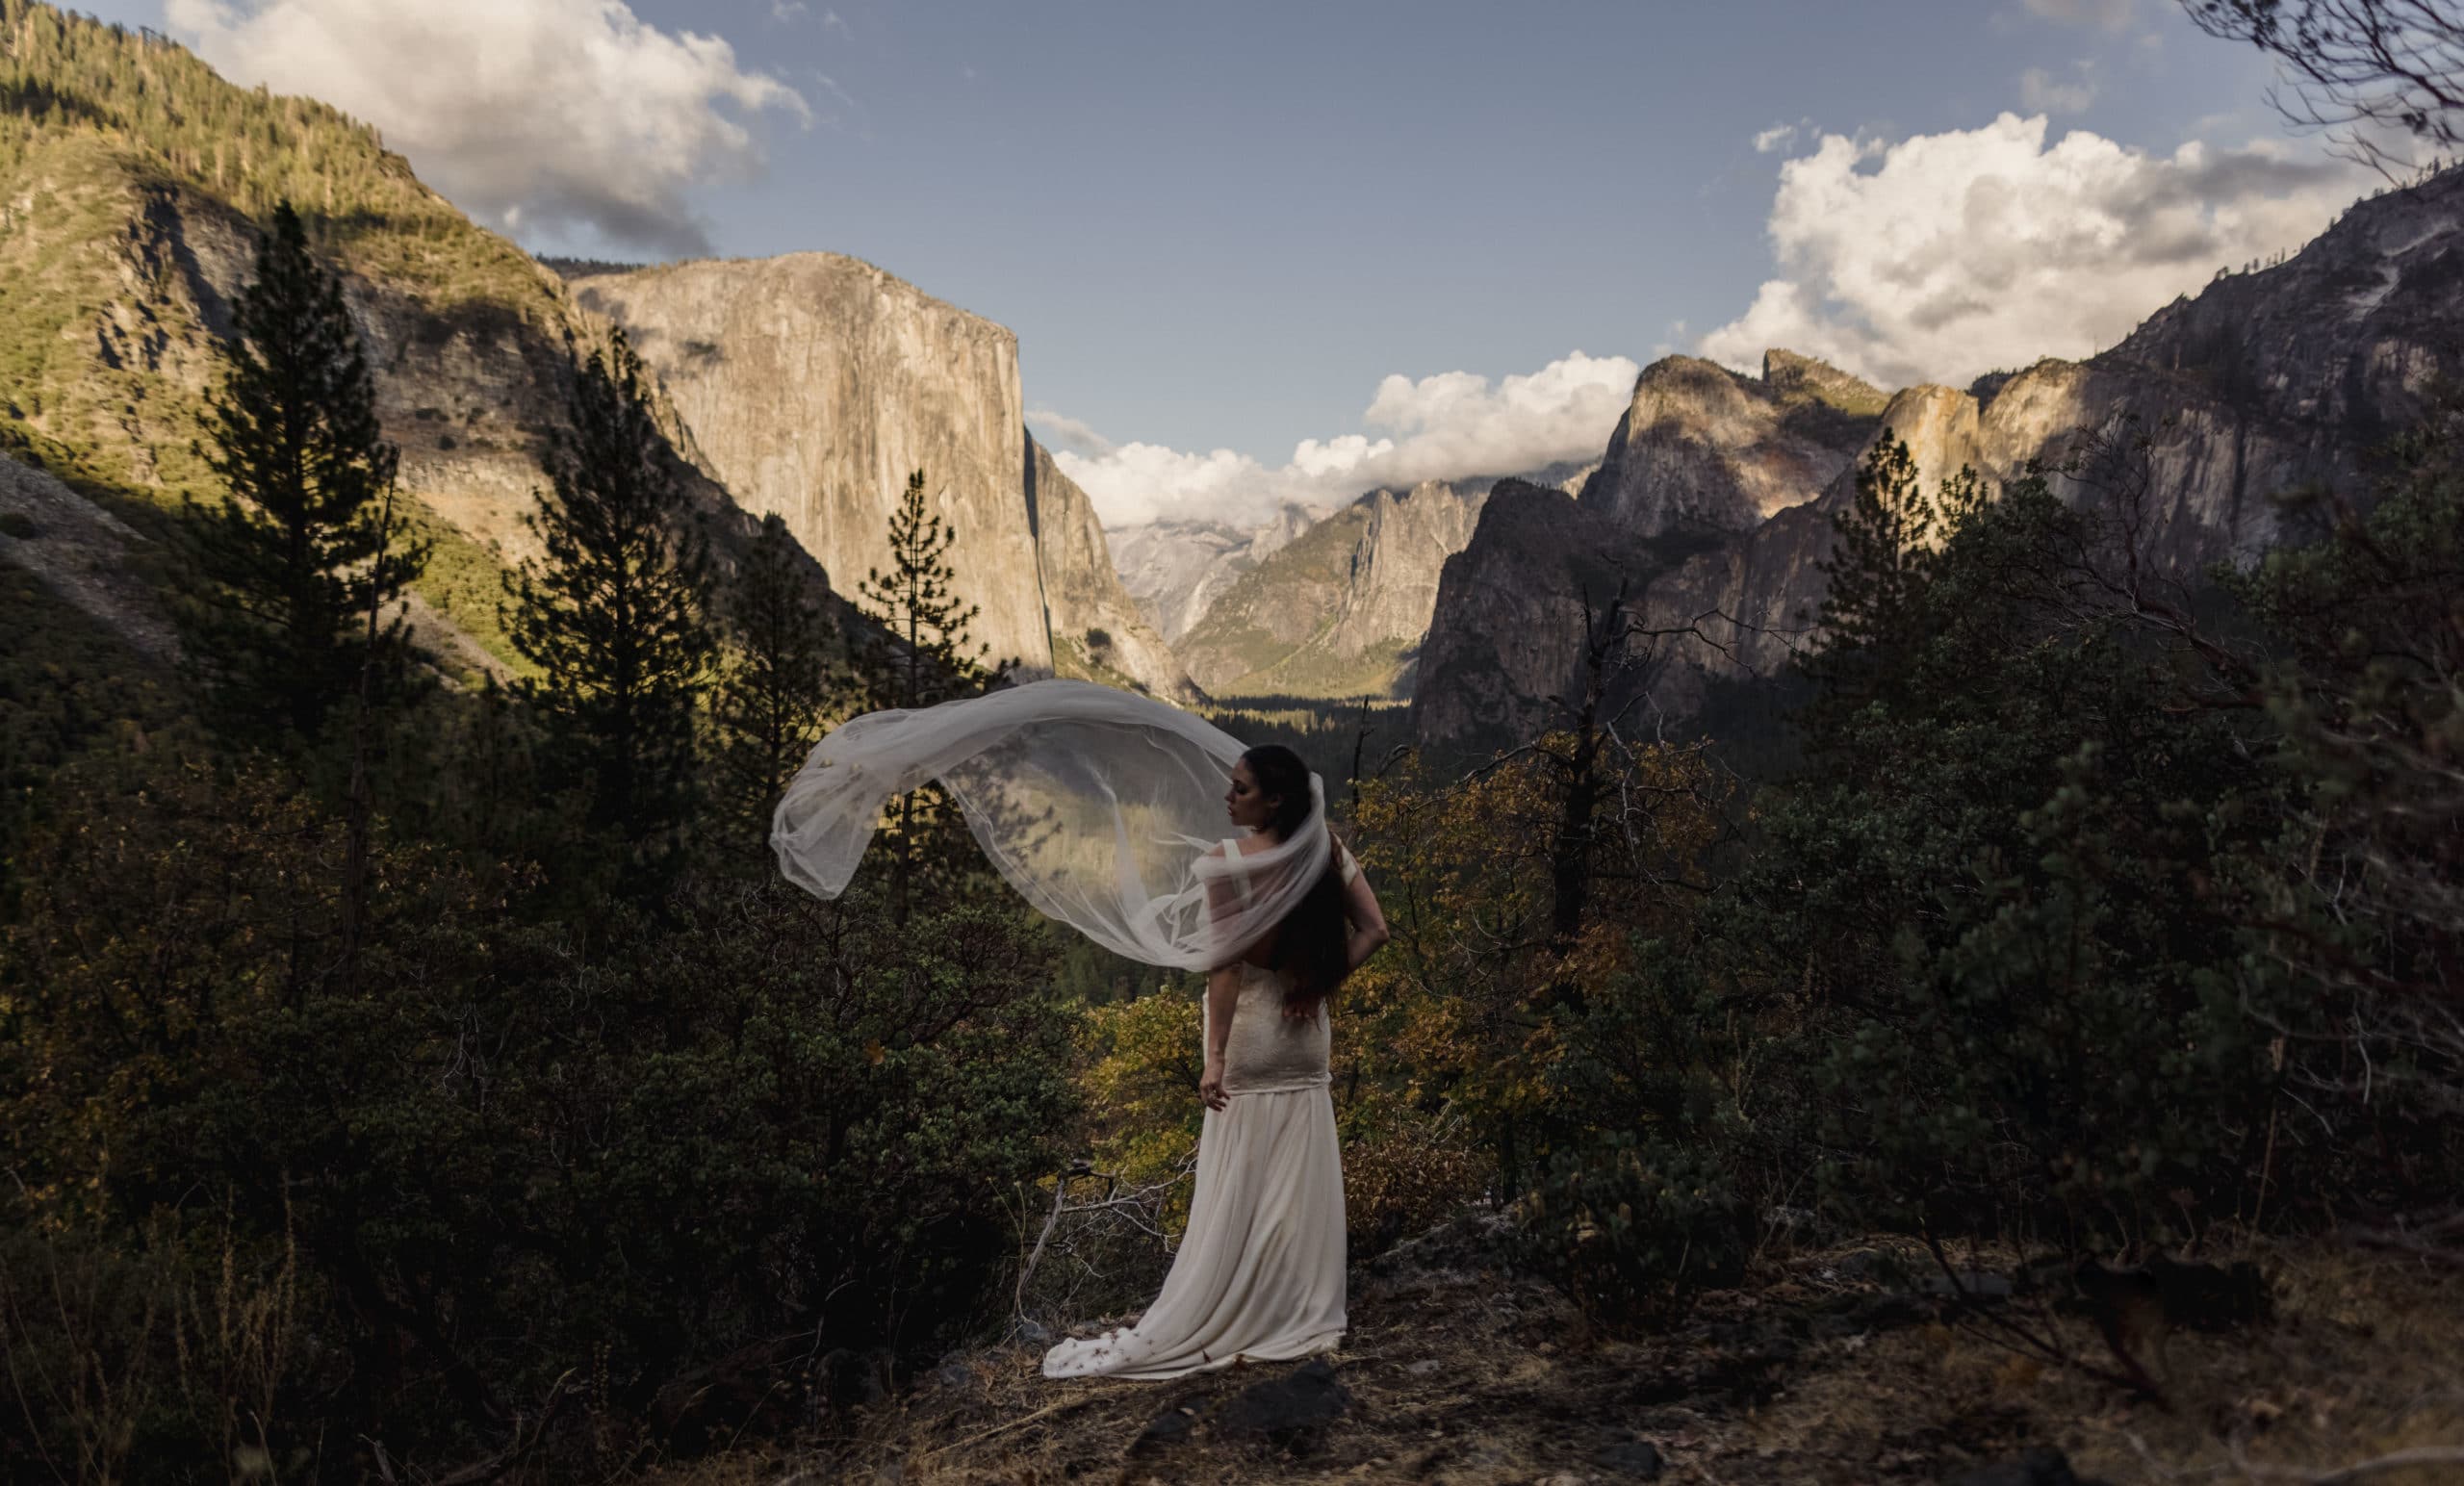 A wedding at Glacier point in Yosemite Valley.